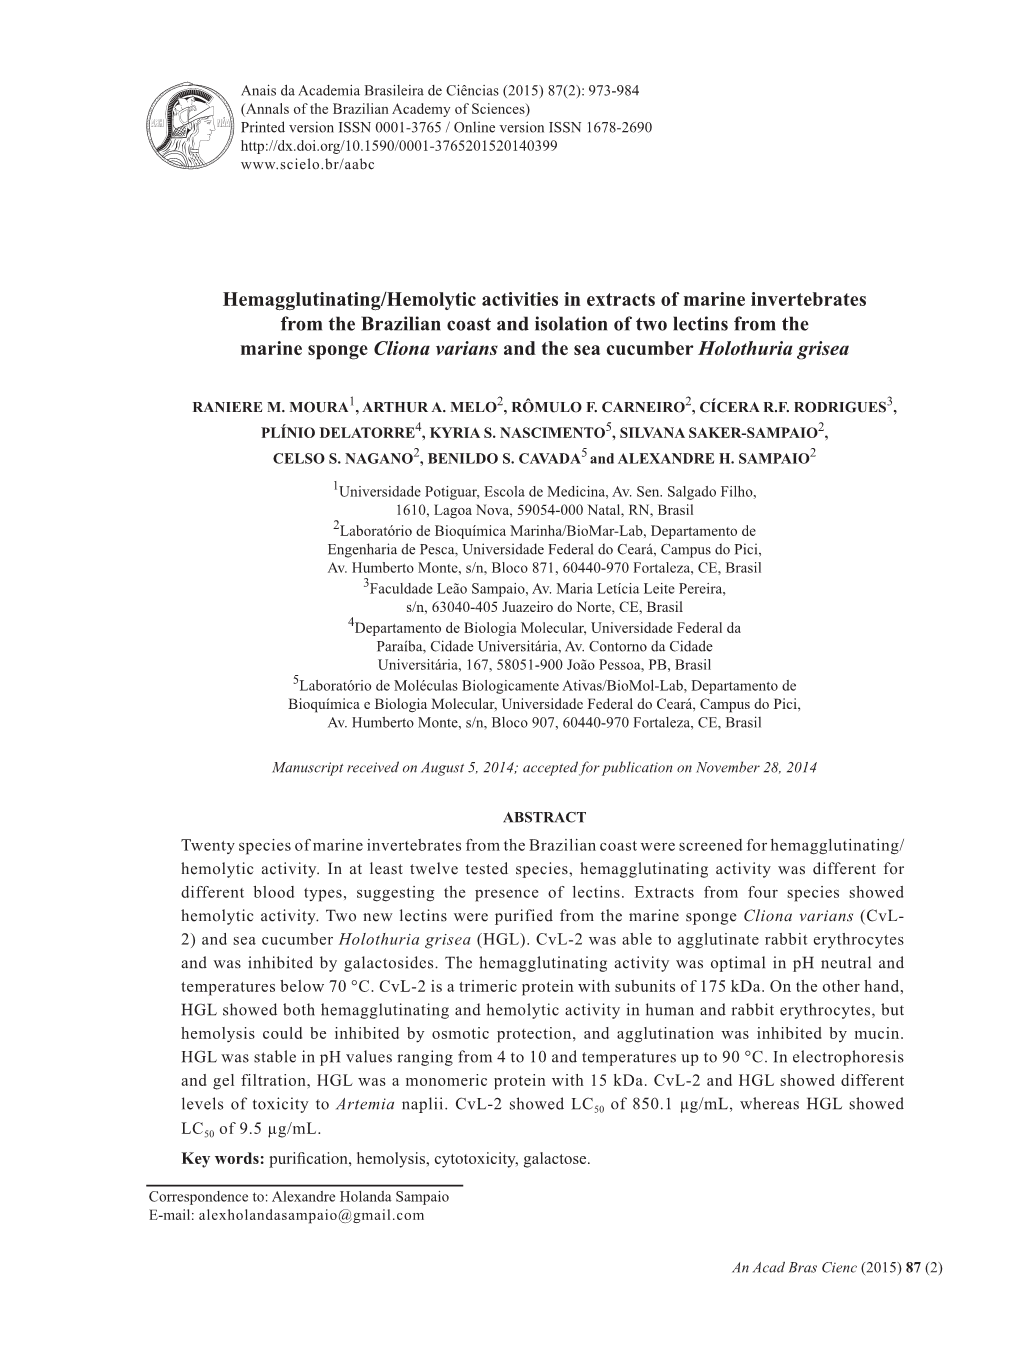 Hemagglutinating/Hemolytic Activities in Extracts of Marine Invertebrates